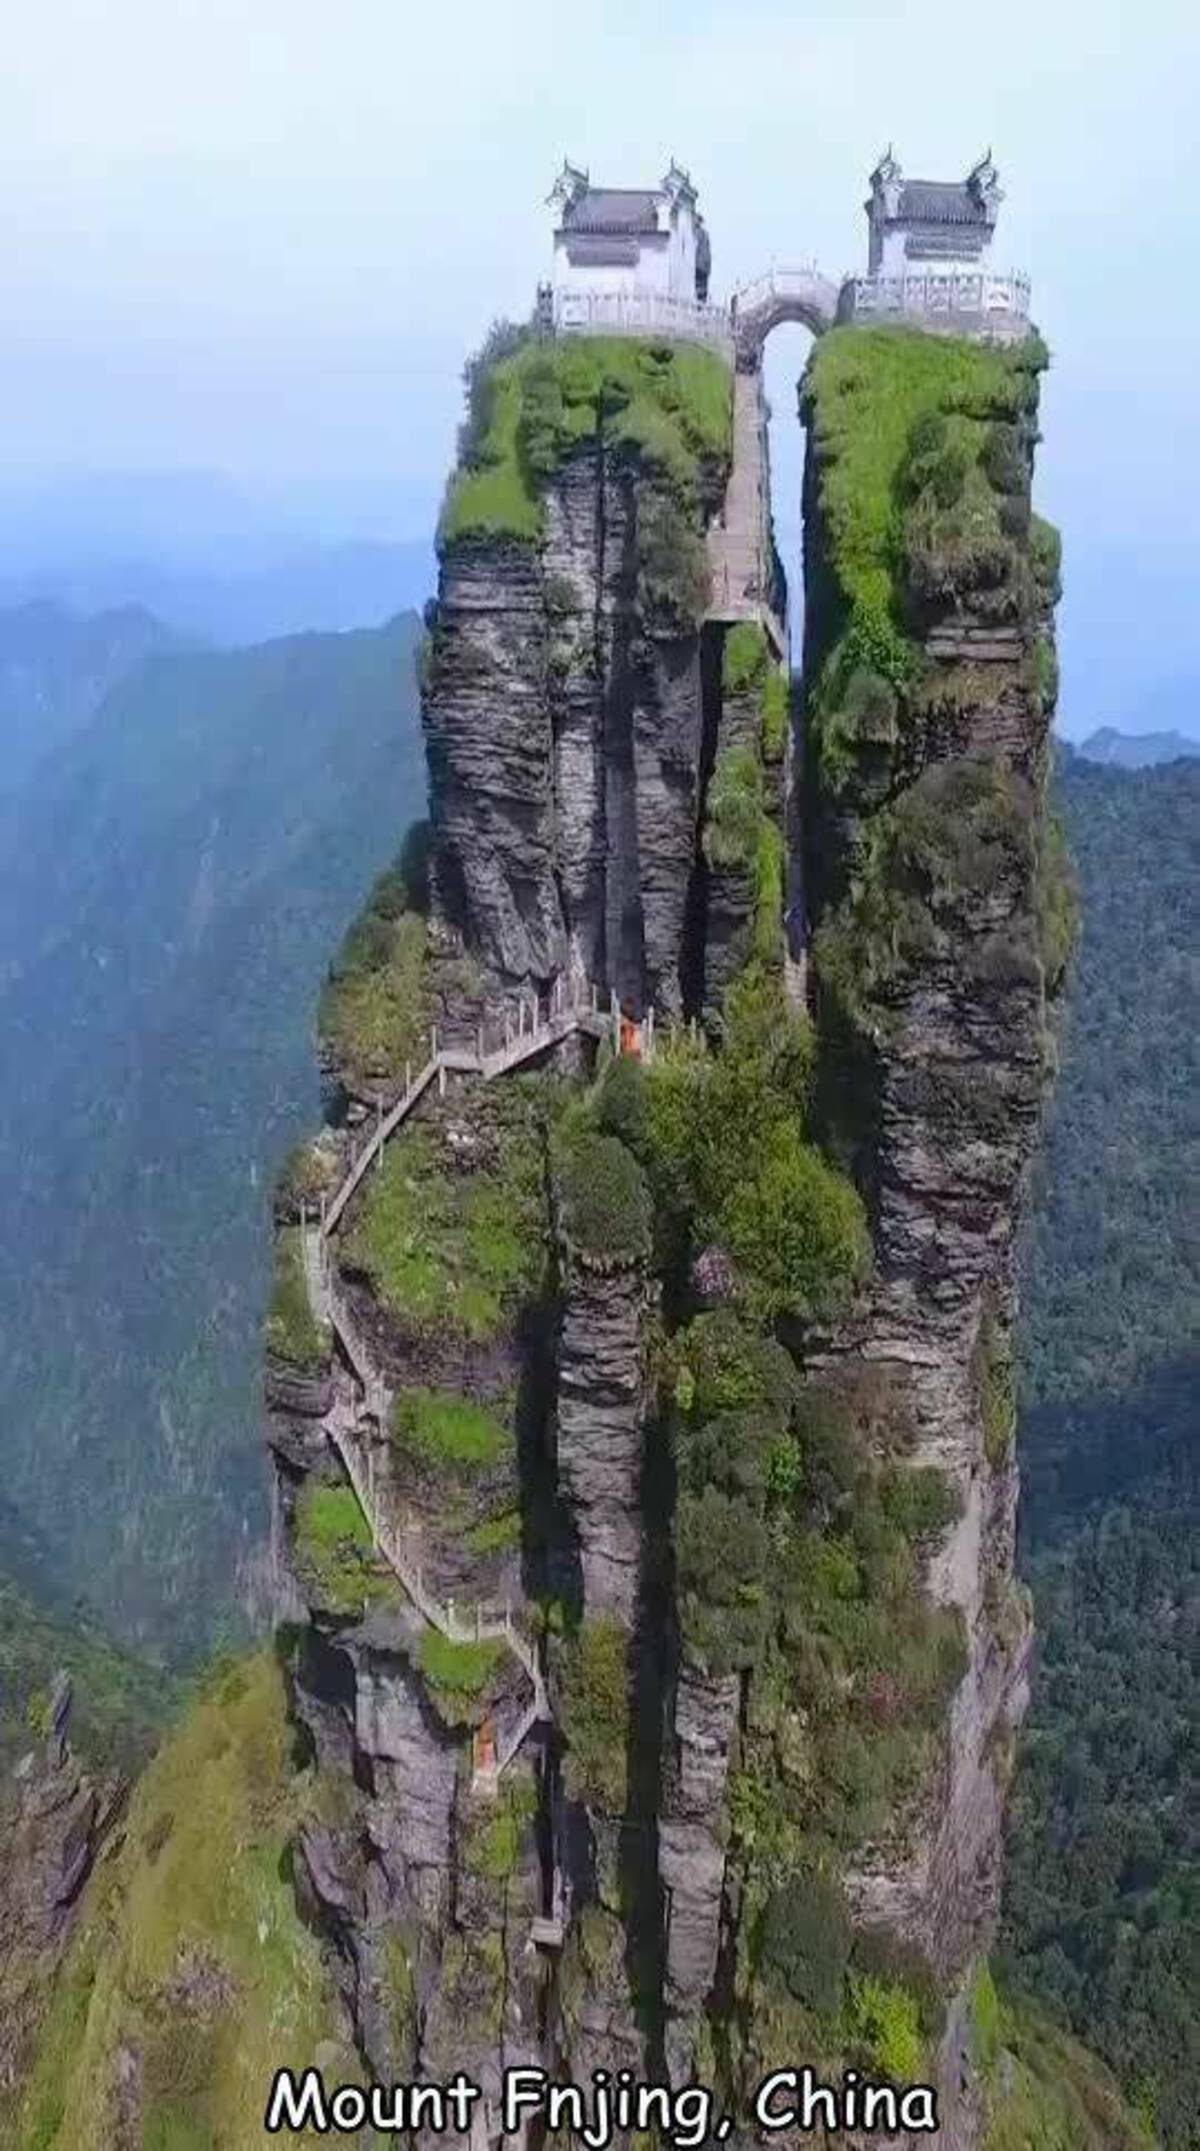 Mount Fnjing, China